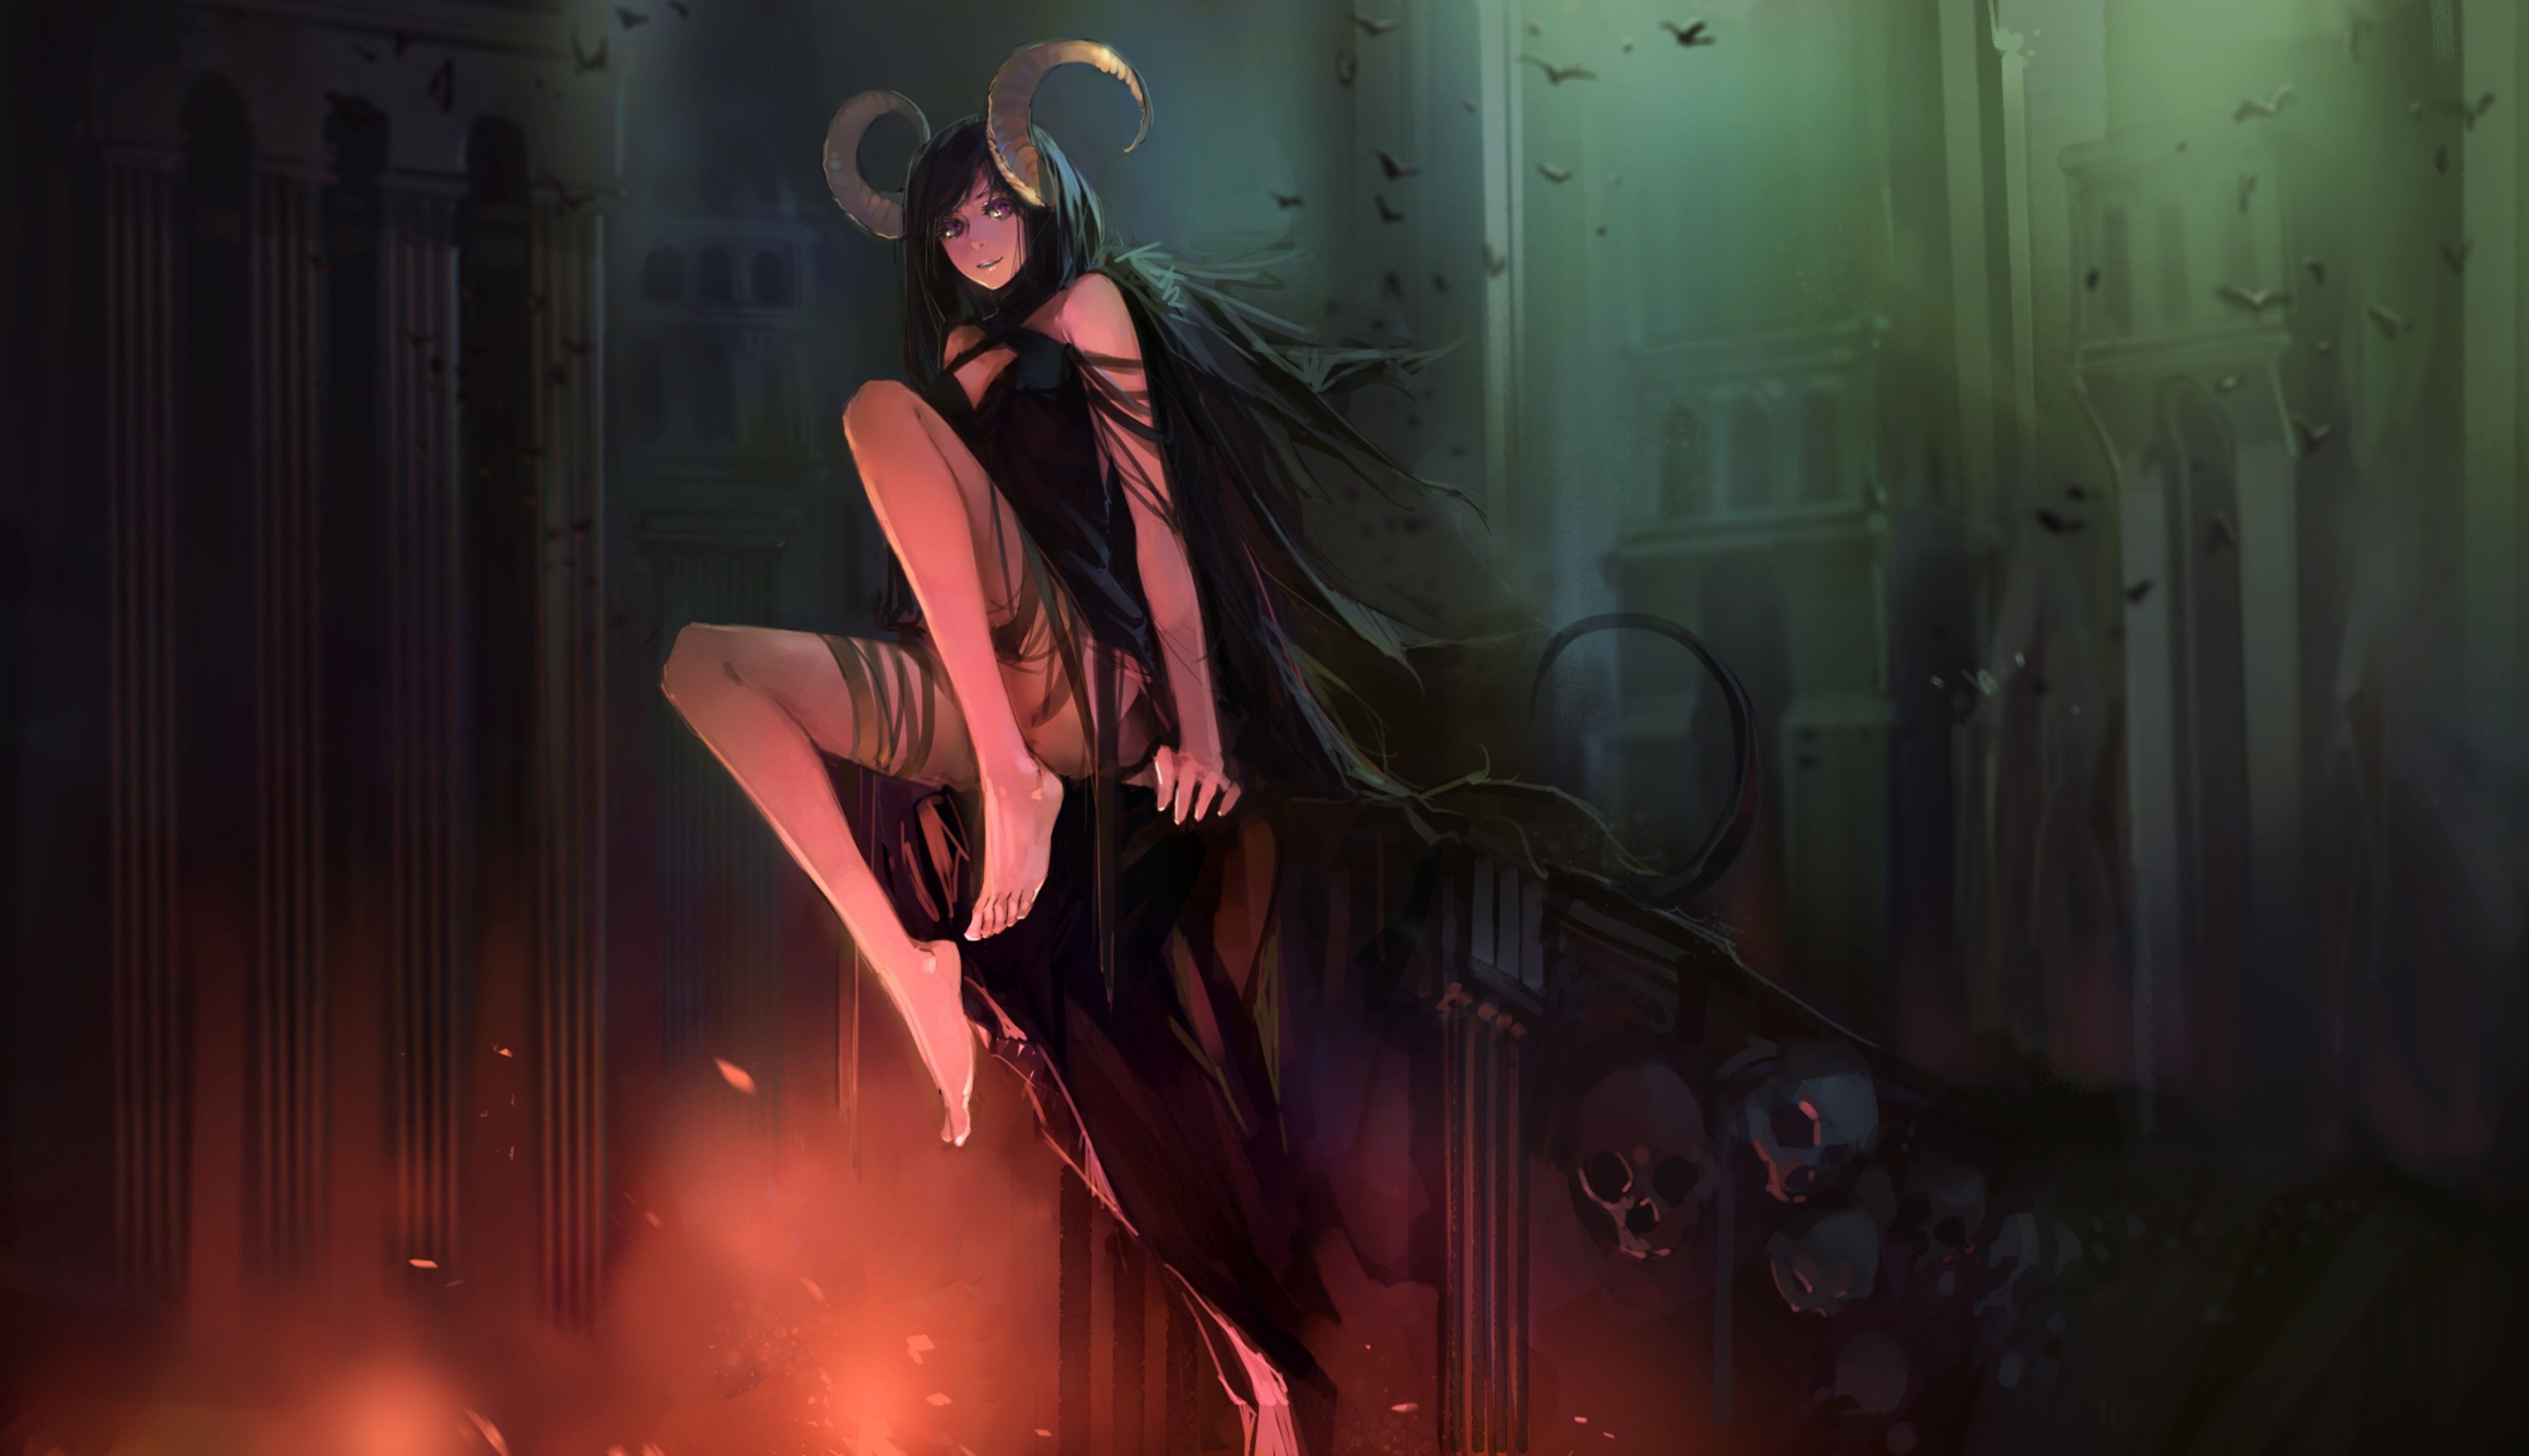 Neon Dark Anime with Horns Wallpaper. by CorruptedRequired on DeviantArt